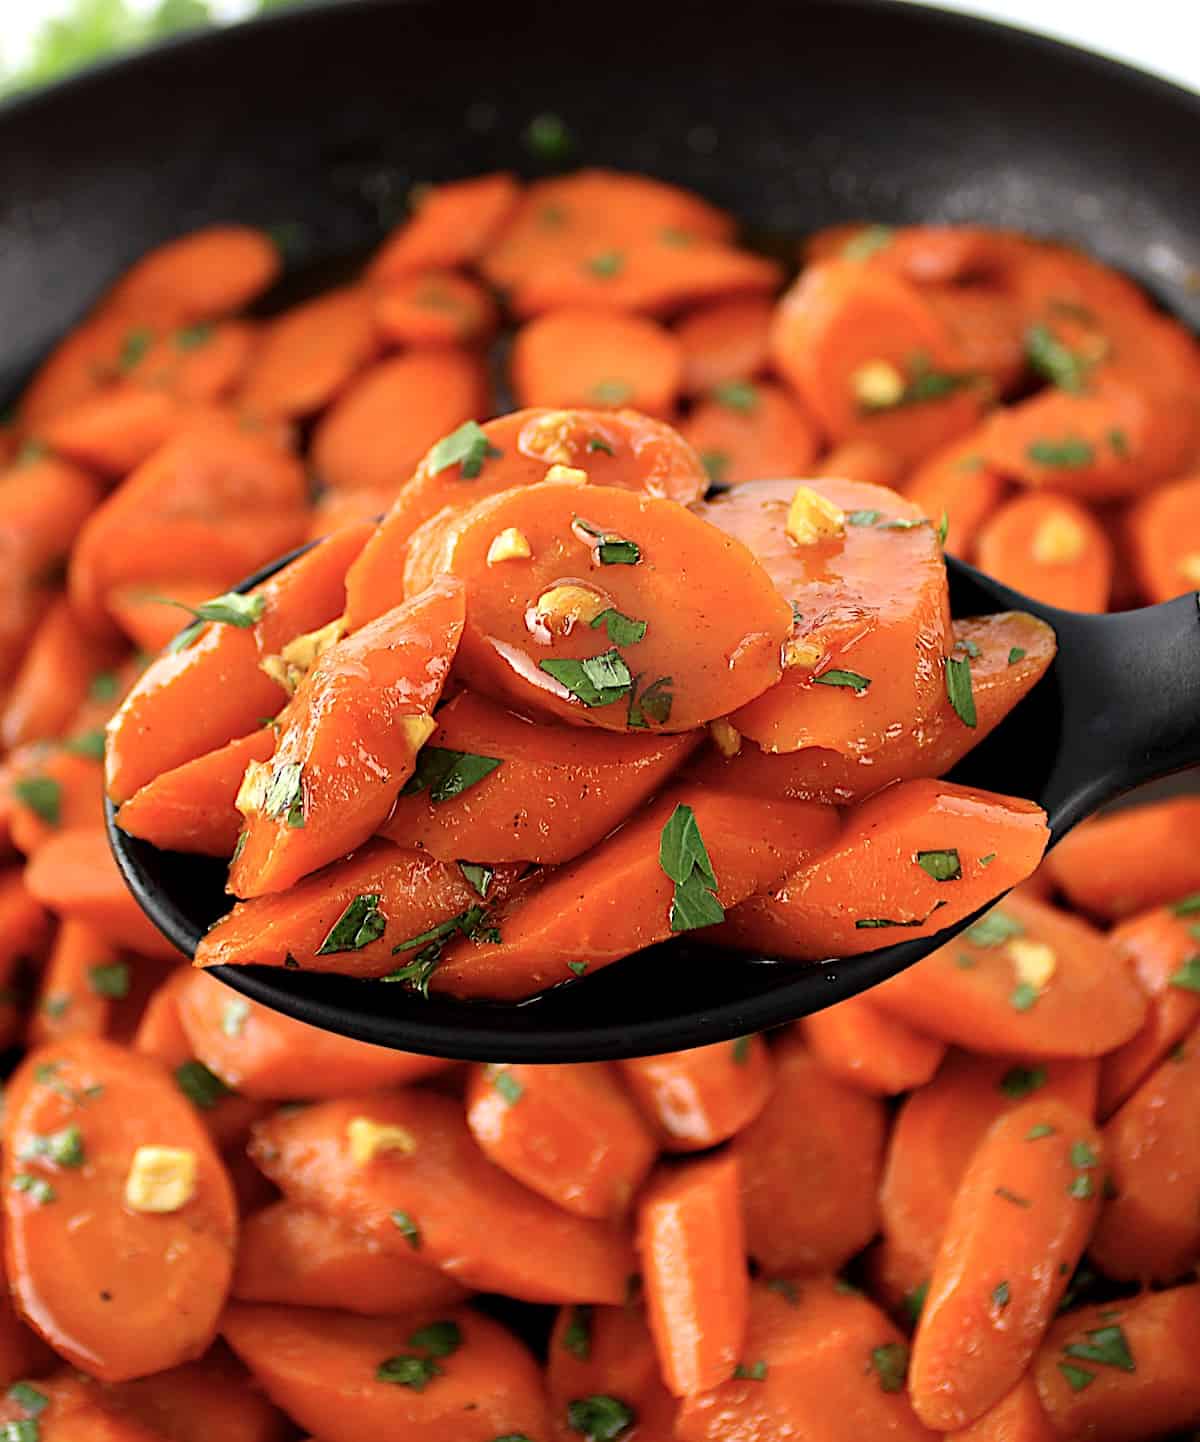 Glazed Carrots held up with black serving spoon over skillet